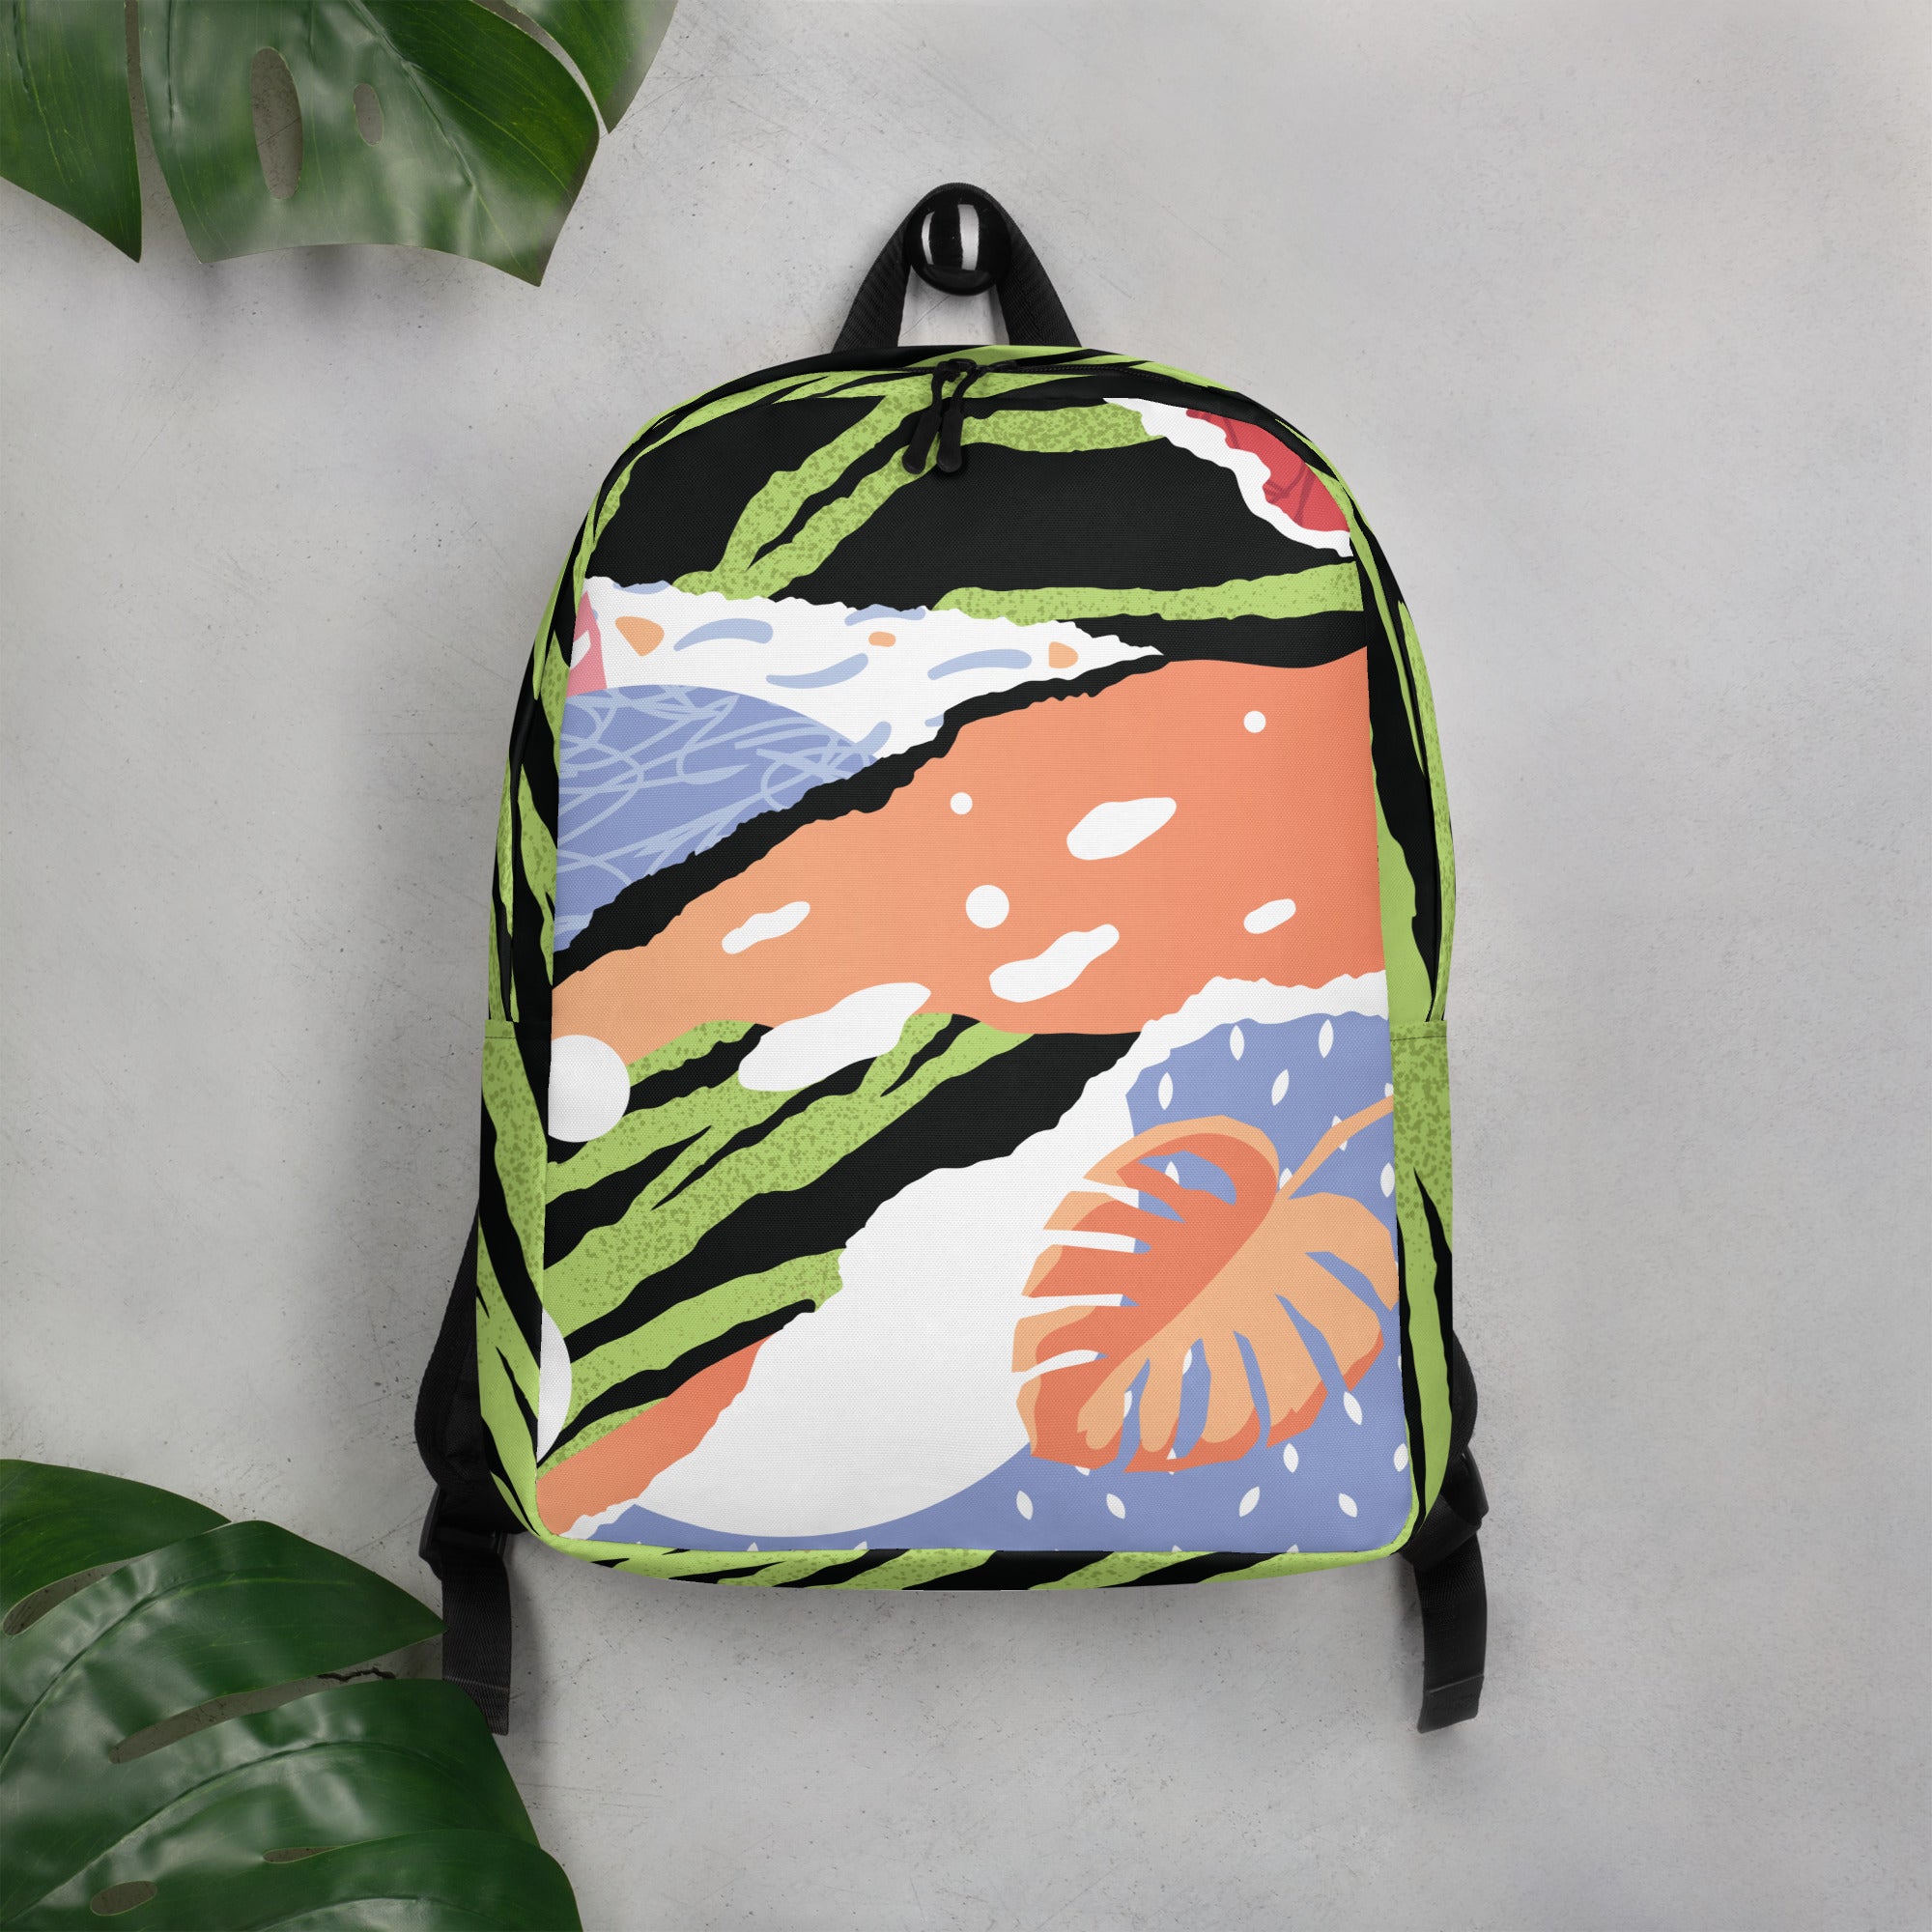 Tropical pop art minimalist backpack hanging on a wall peg